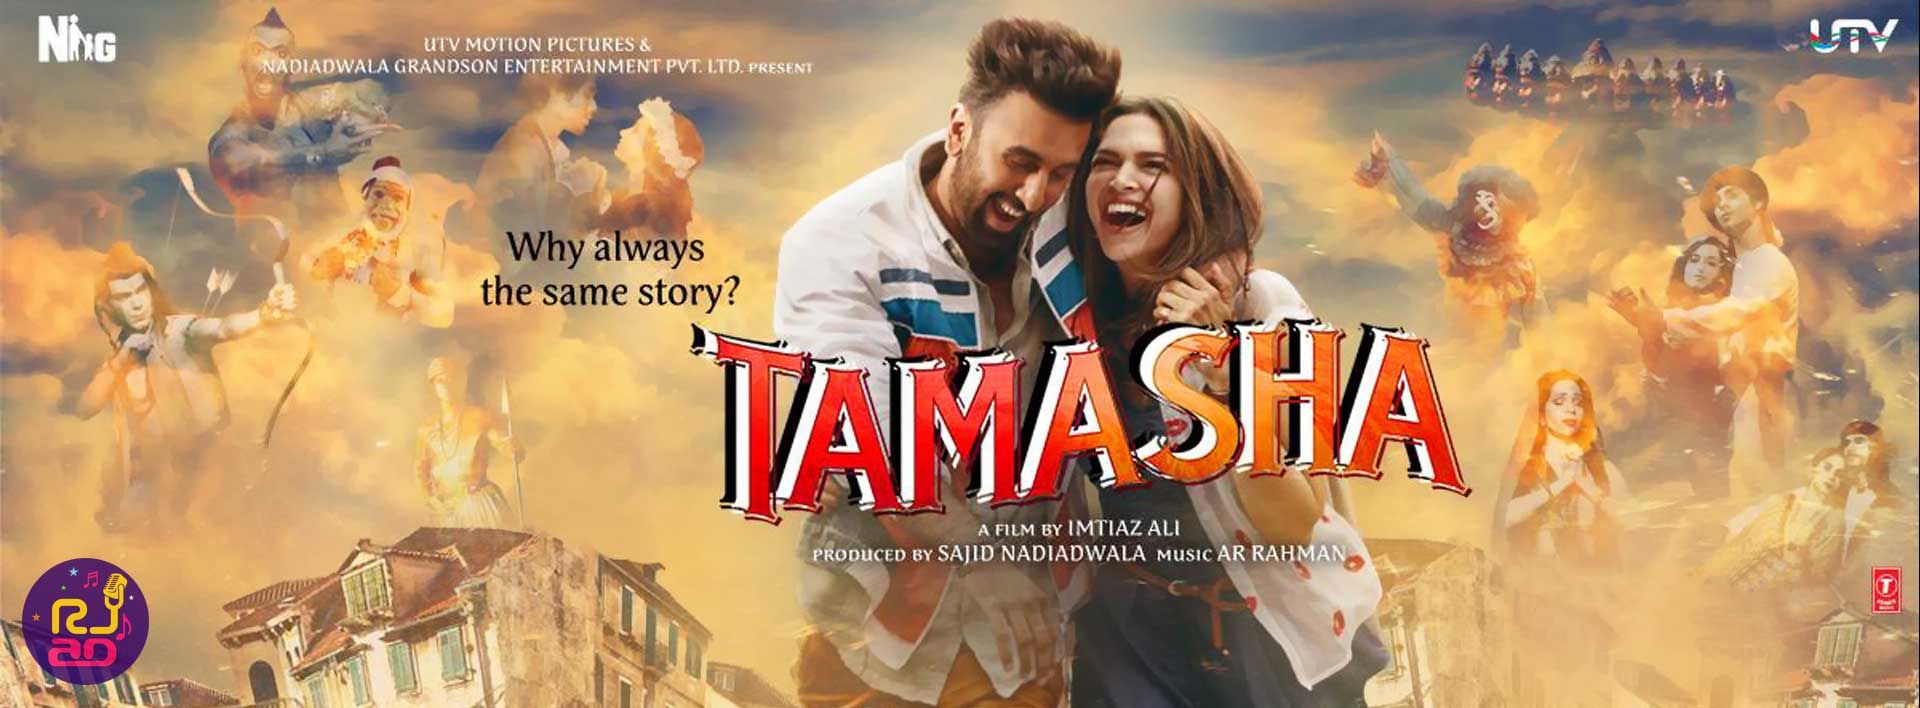 download tamasha full movie